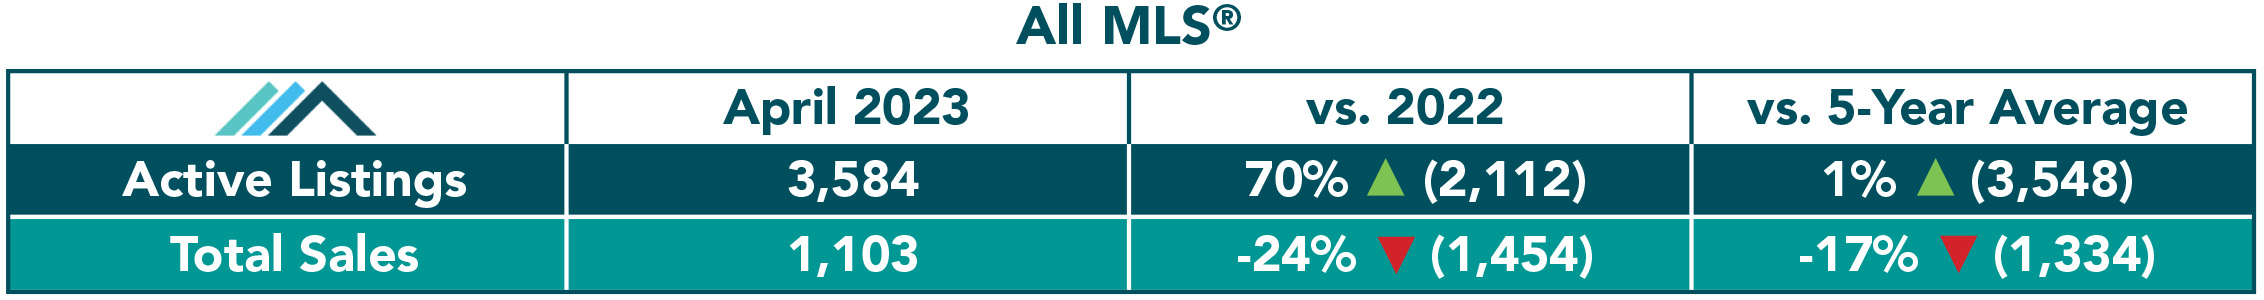 ALL MLS 2023